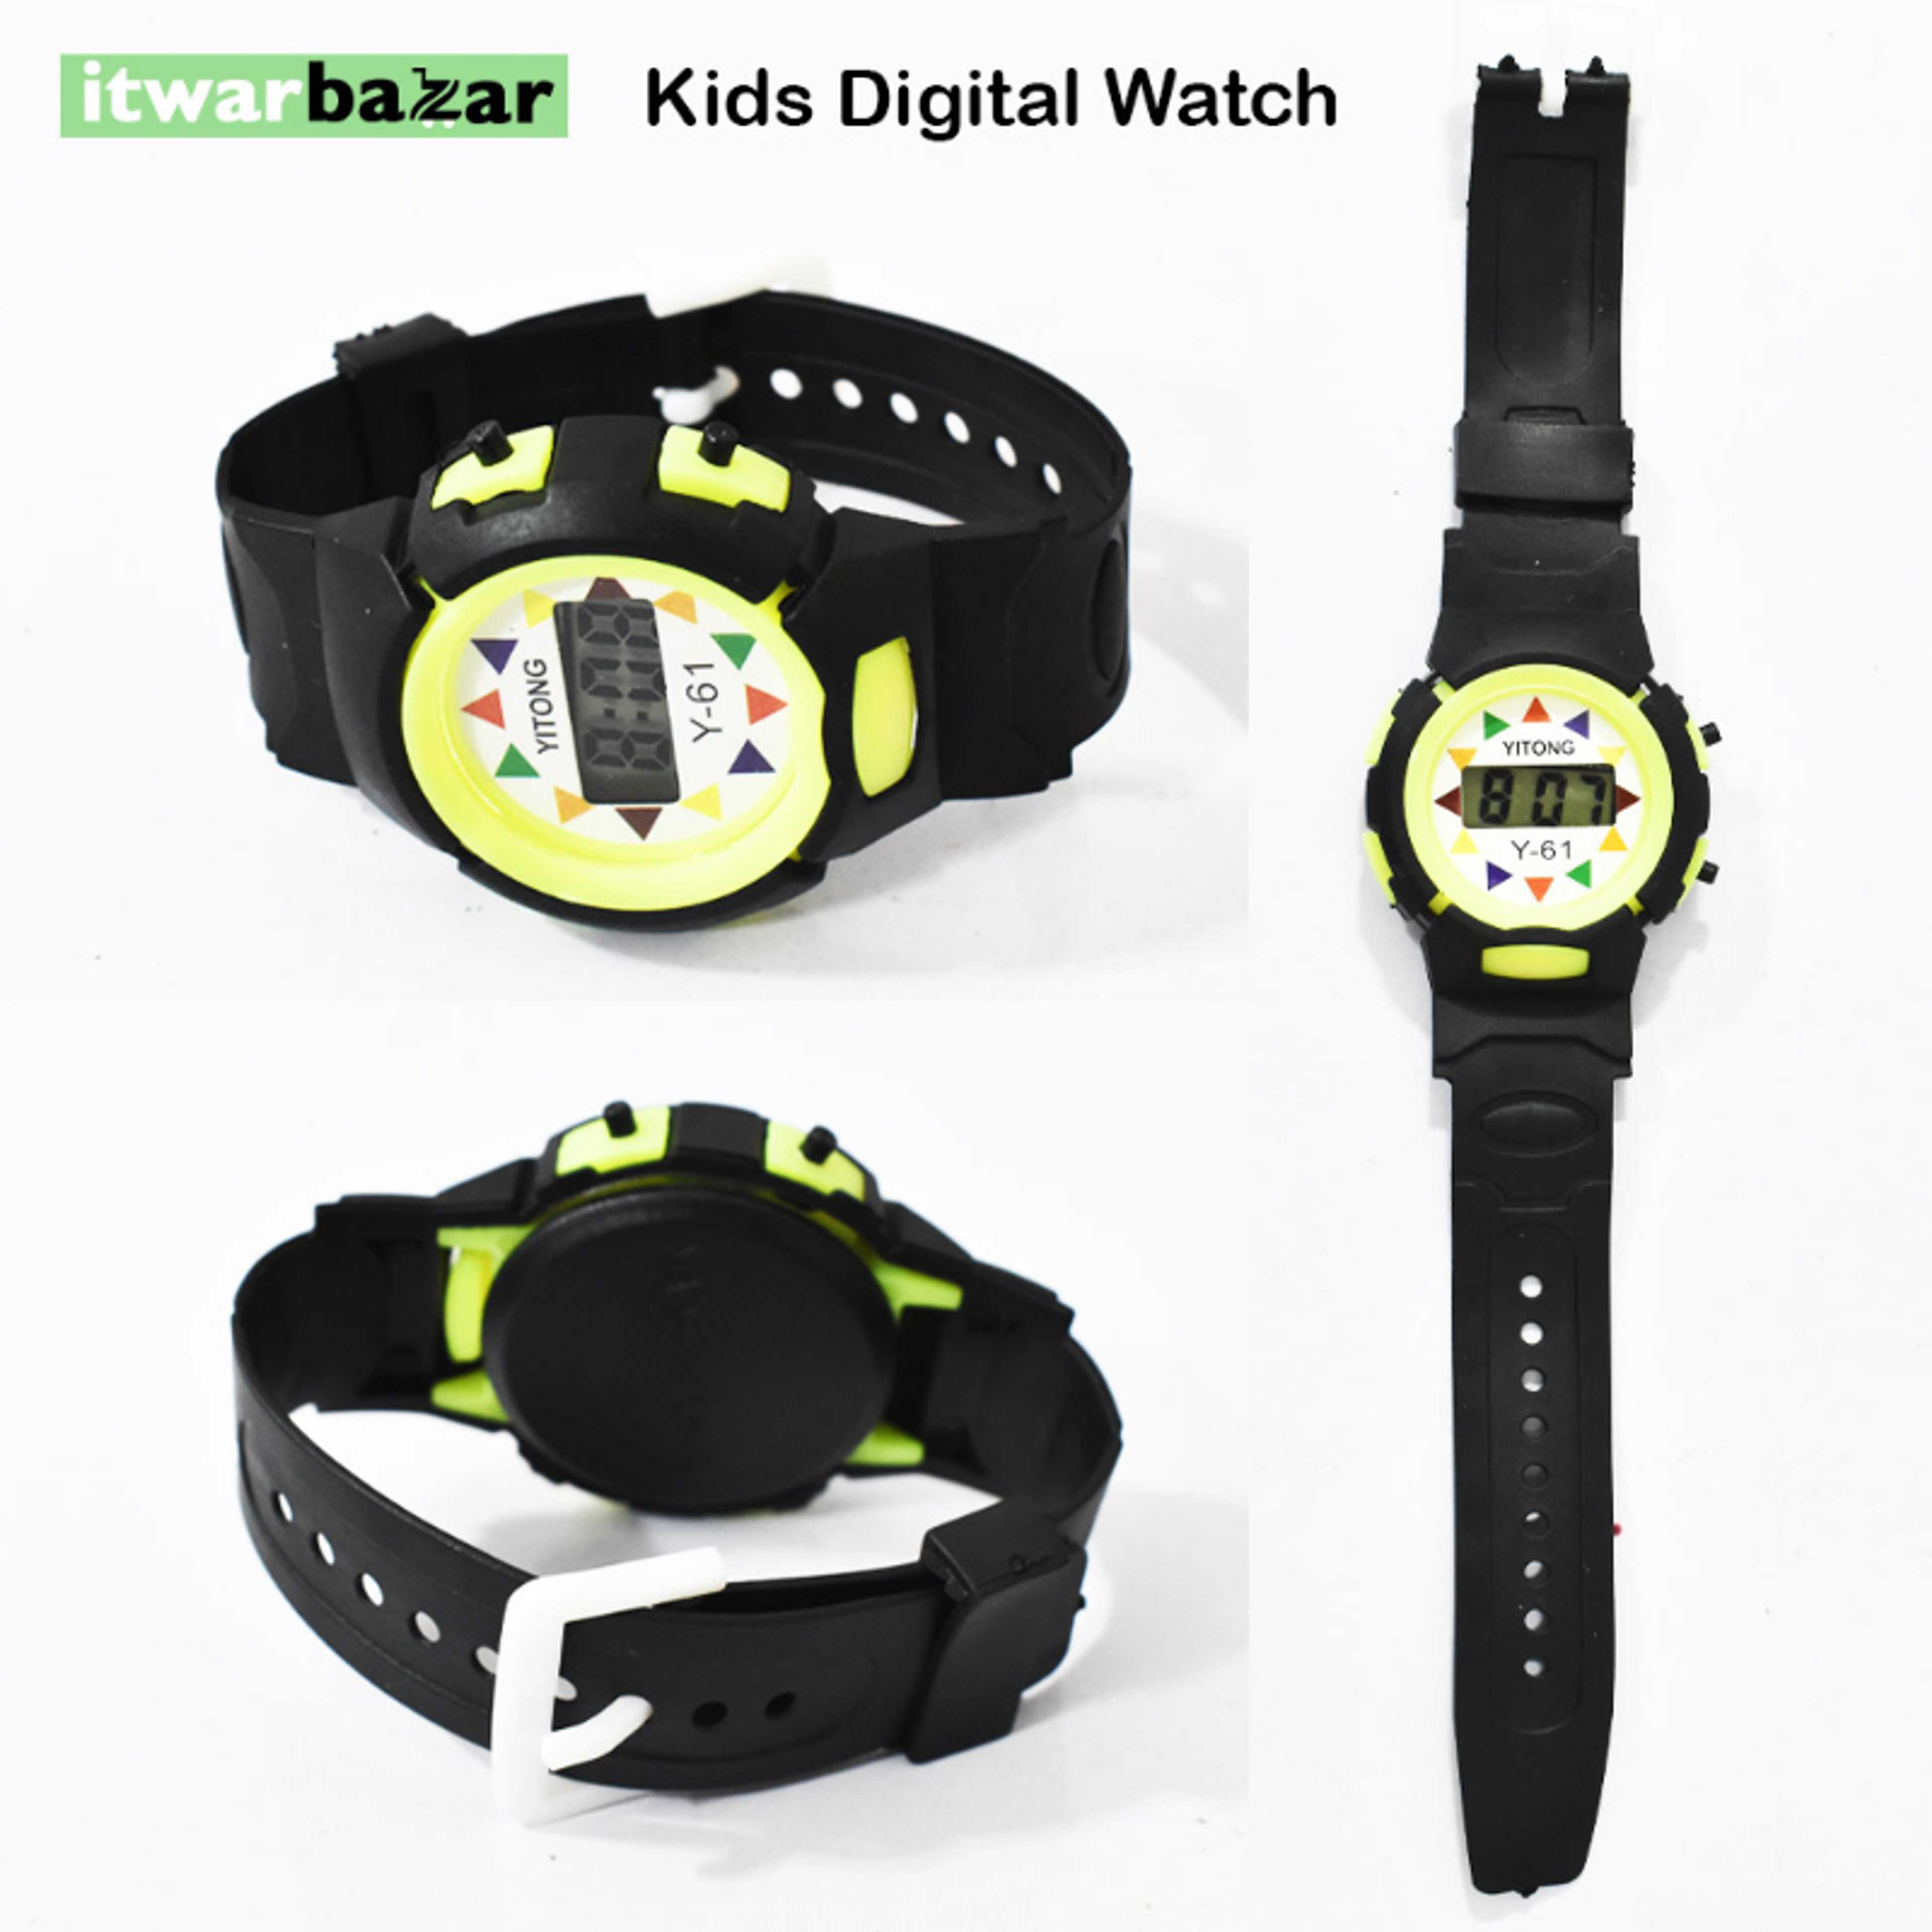 Kids Digital Watch Children Cartoon Analog Digital Sport LED Electronic Waterproof Wrist Watch gift